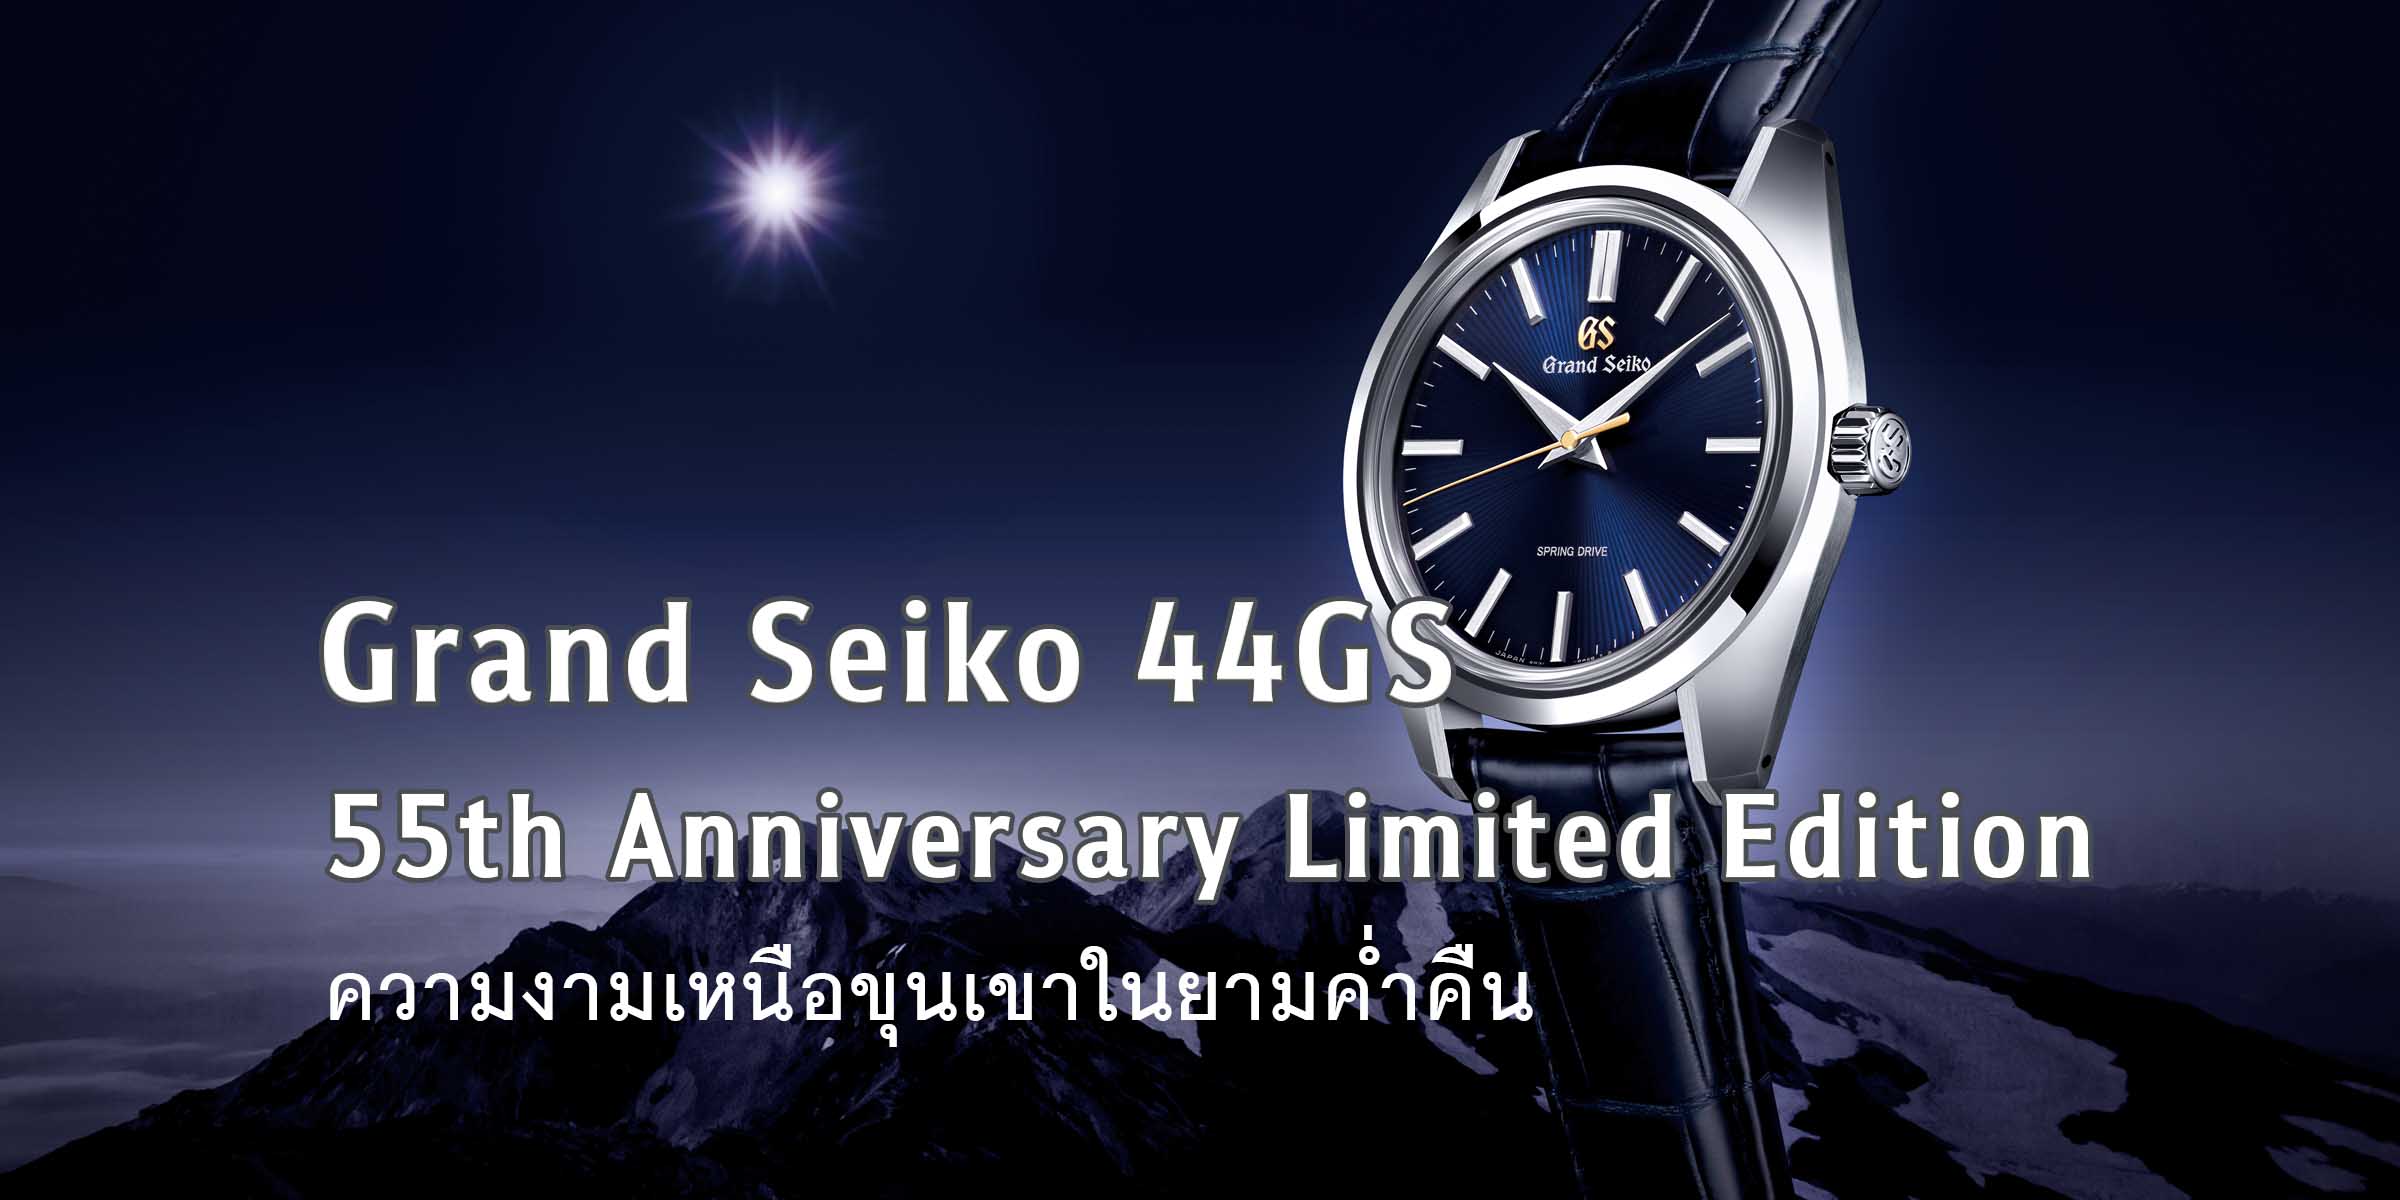 Grand Seiko 44GS 55th Anniversary Limited Edition